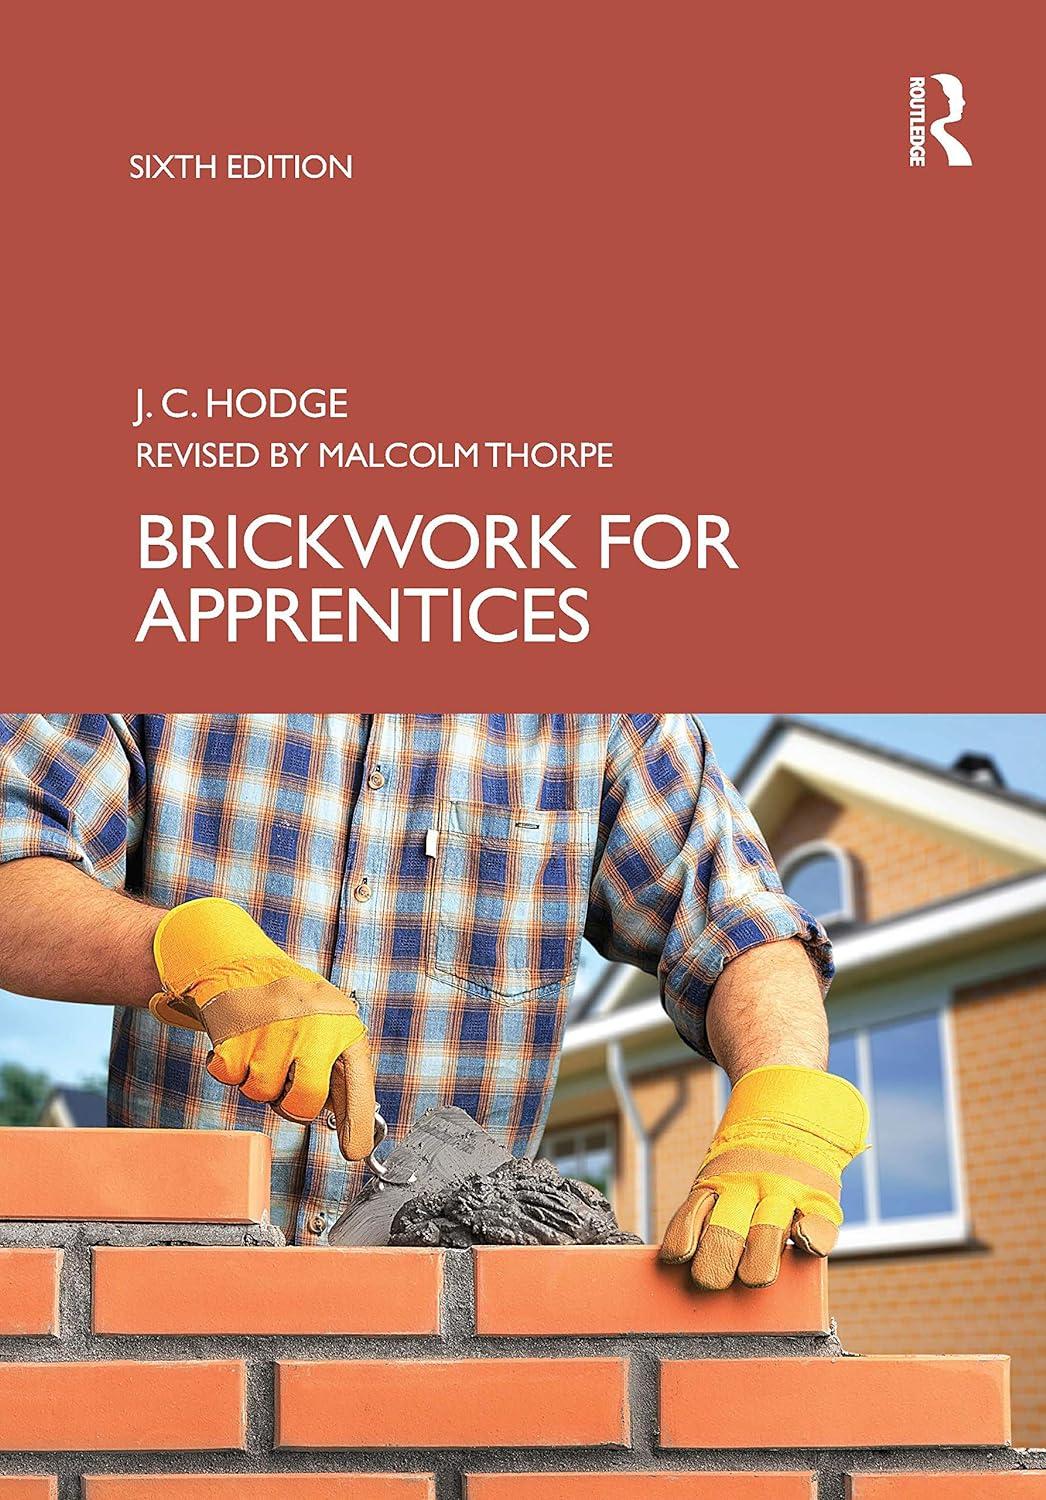 brickwork for apprentices 6th edition j.c. hodge, malcolm thorpe 0367624346, 978-0367624347